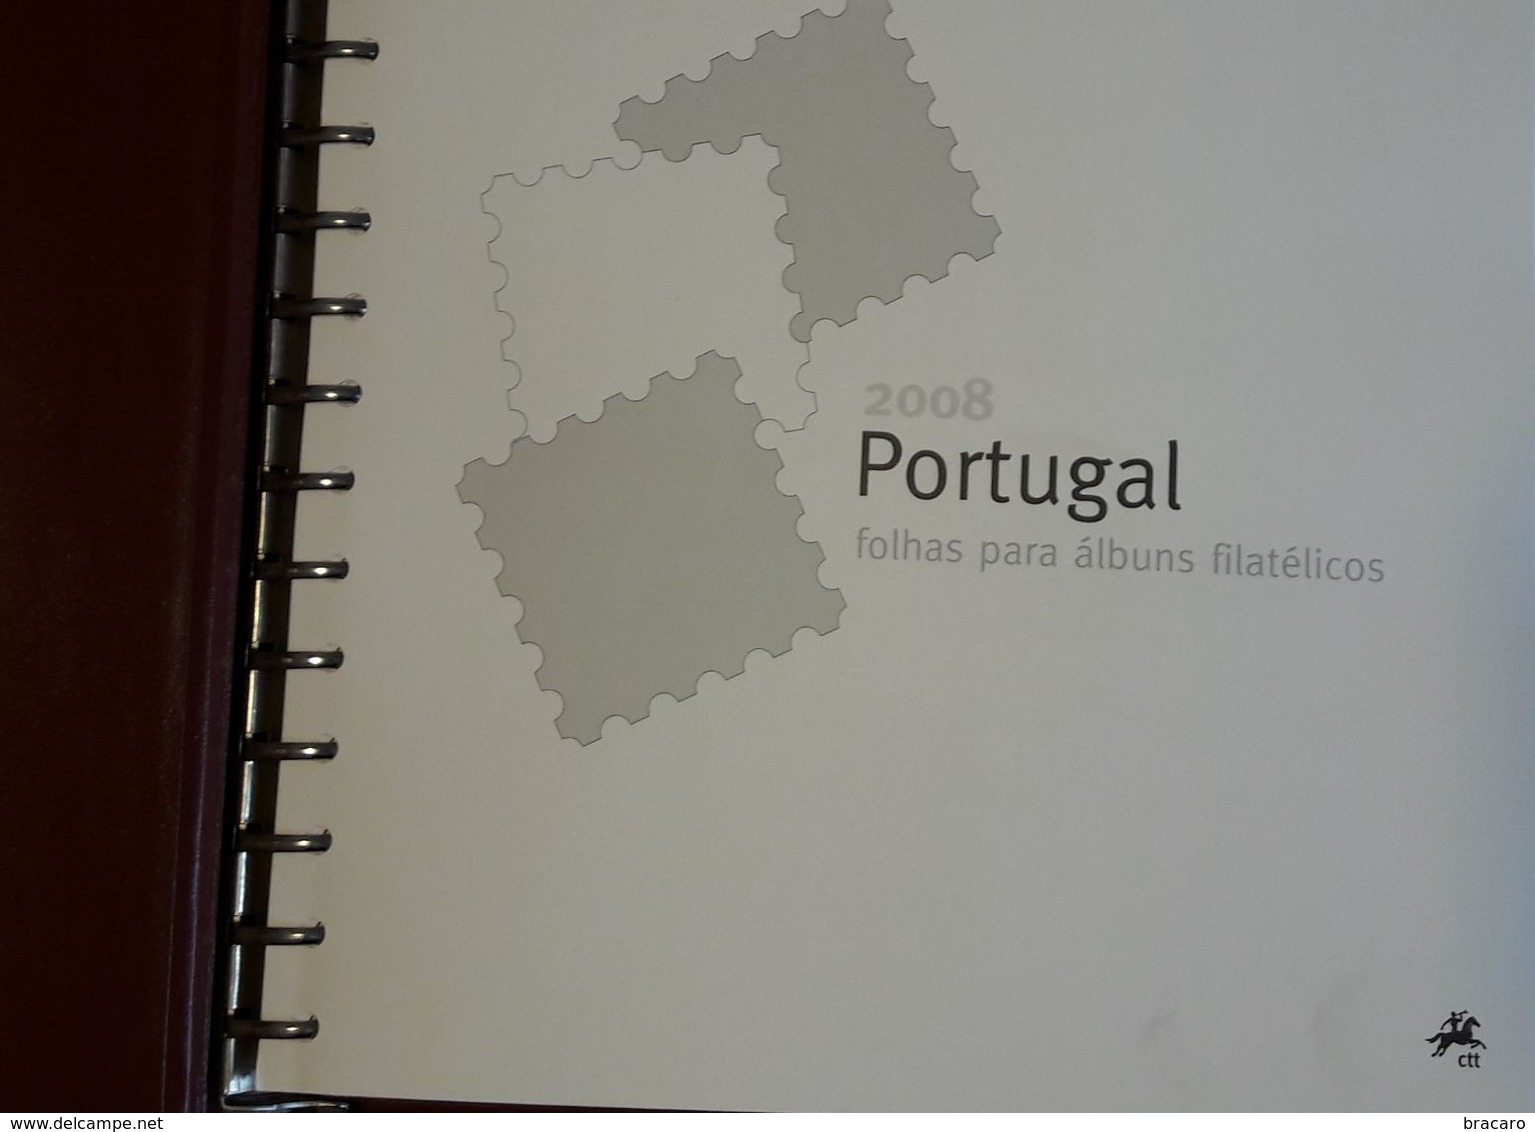 PORTUGAL - ÁLBUM FILATÉLICO - Full Year Stamps + Blocks + ATM / Machine Stamps - MNH - 2008 - Livre De L'année